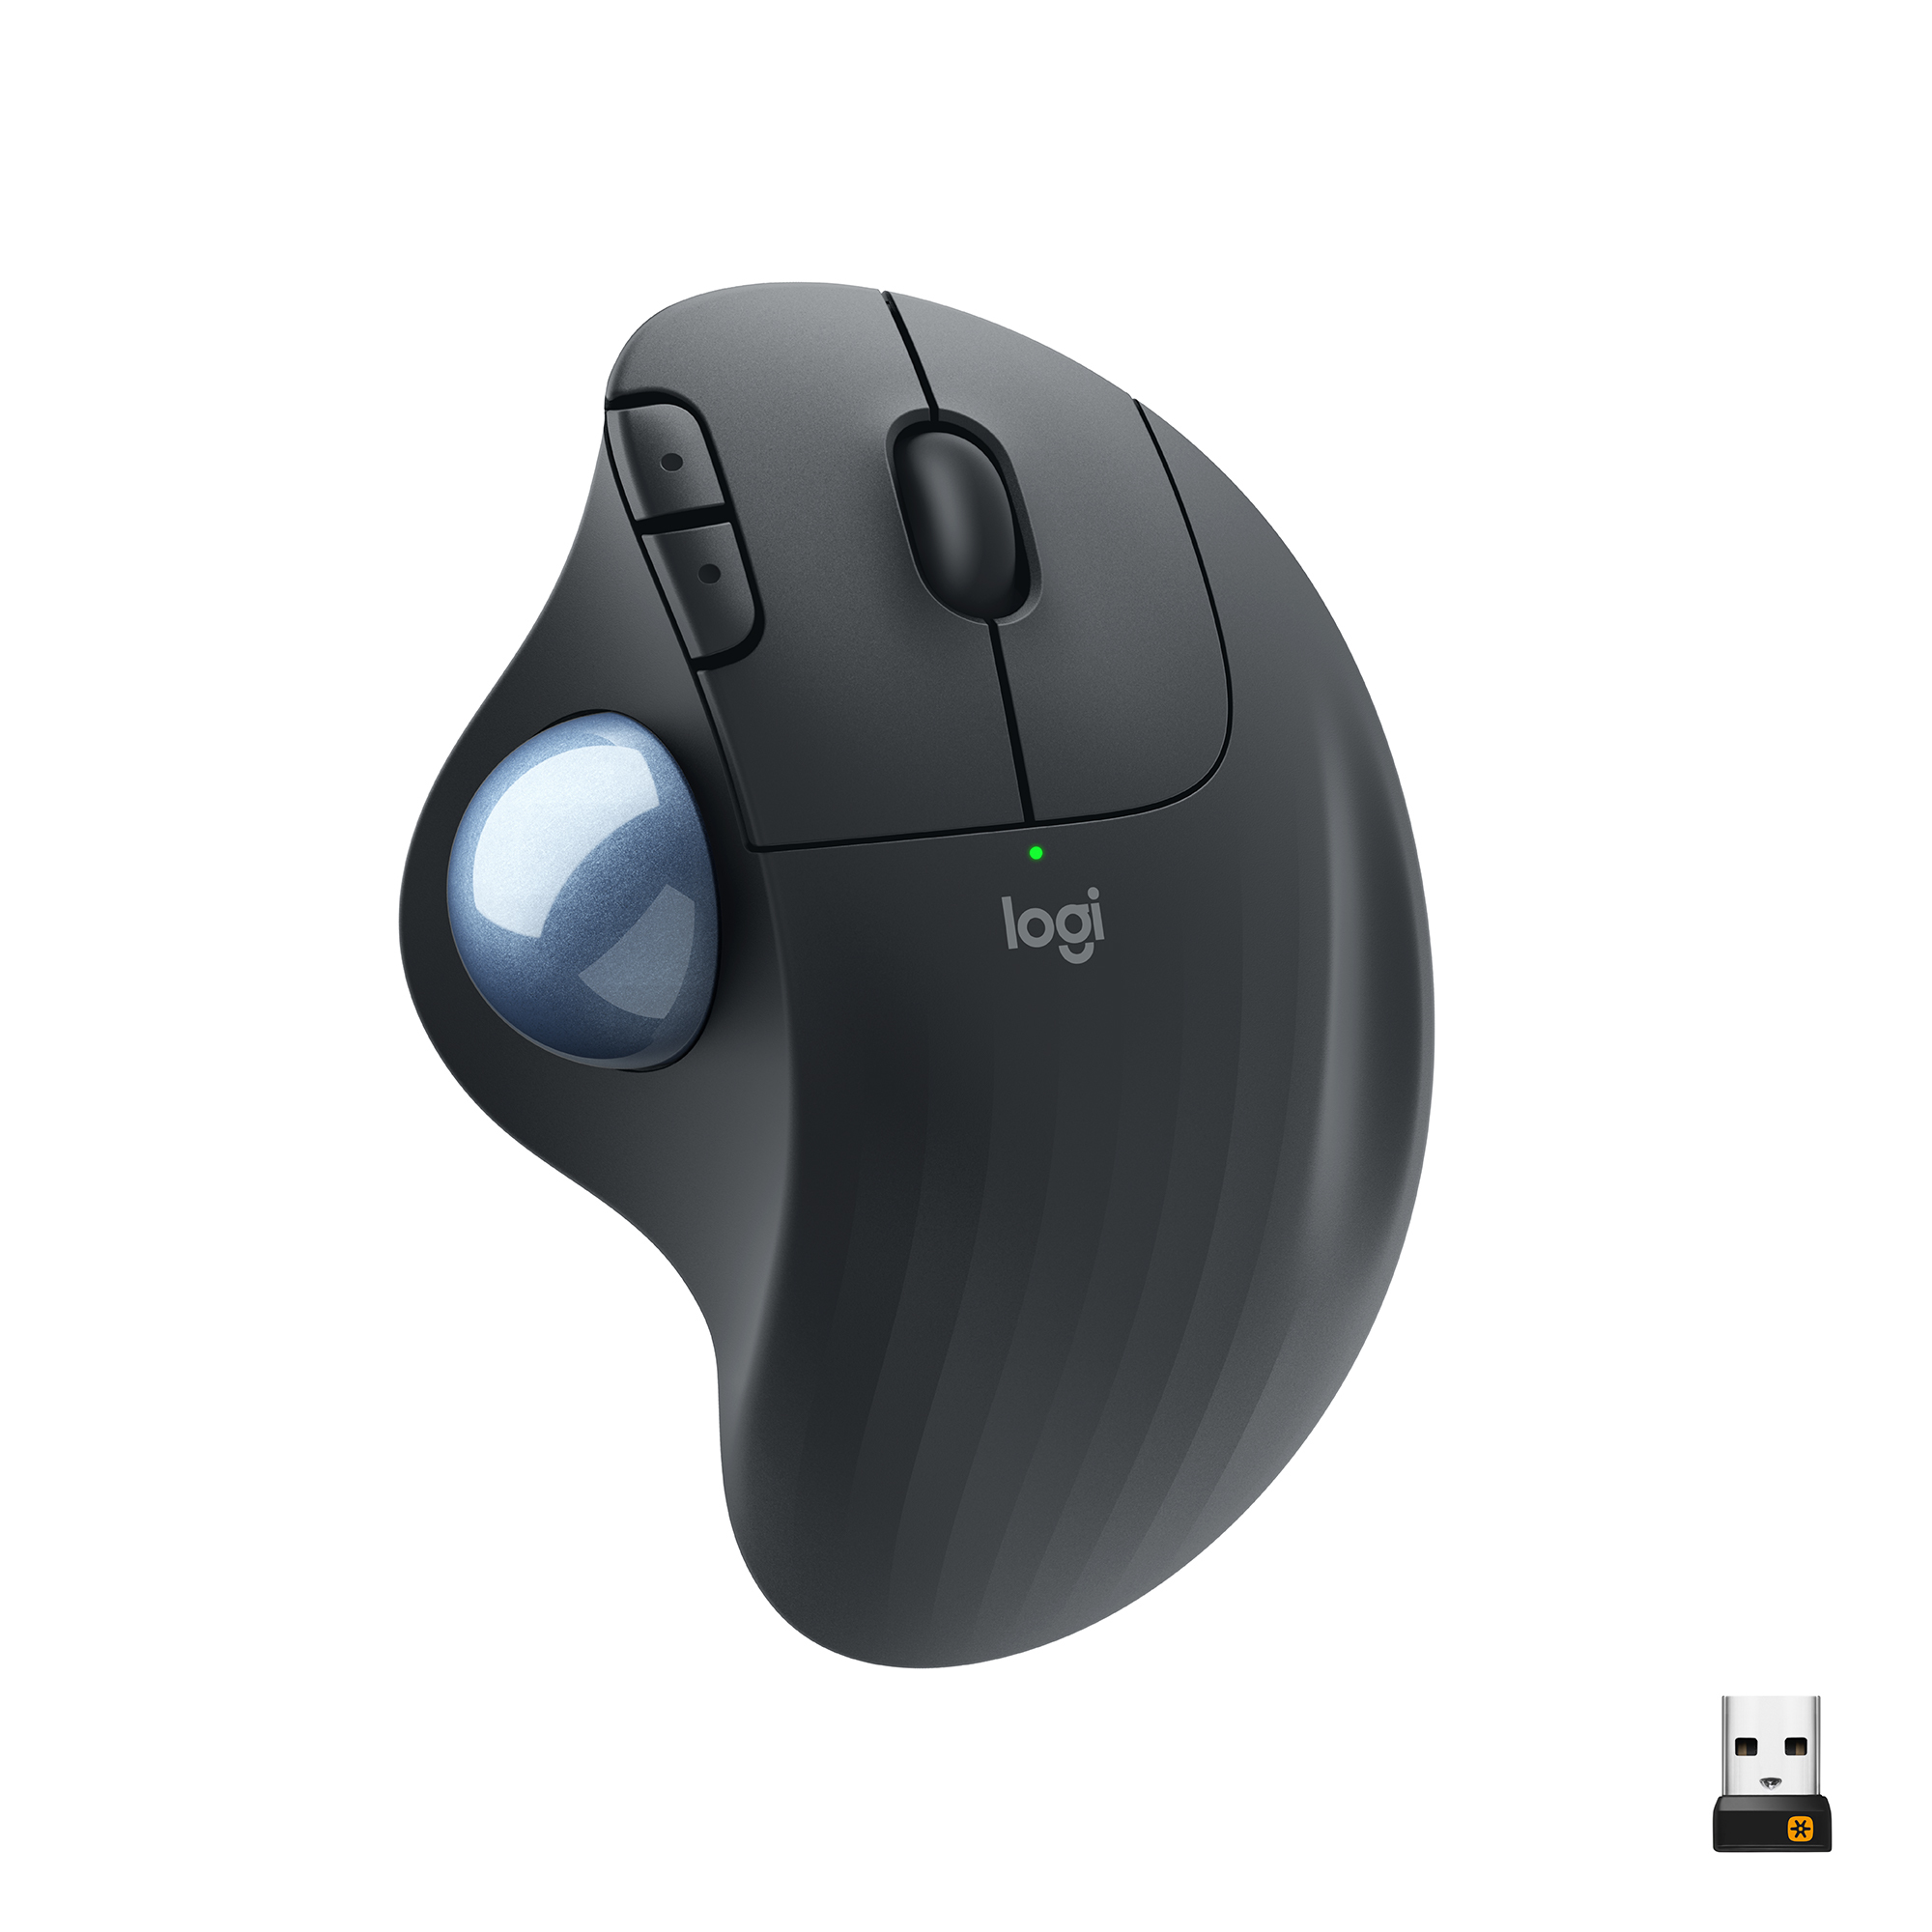  ERGO M575 Wireless Mouse GRAPHITE